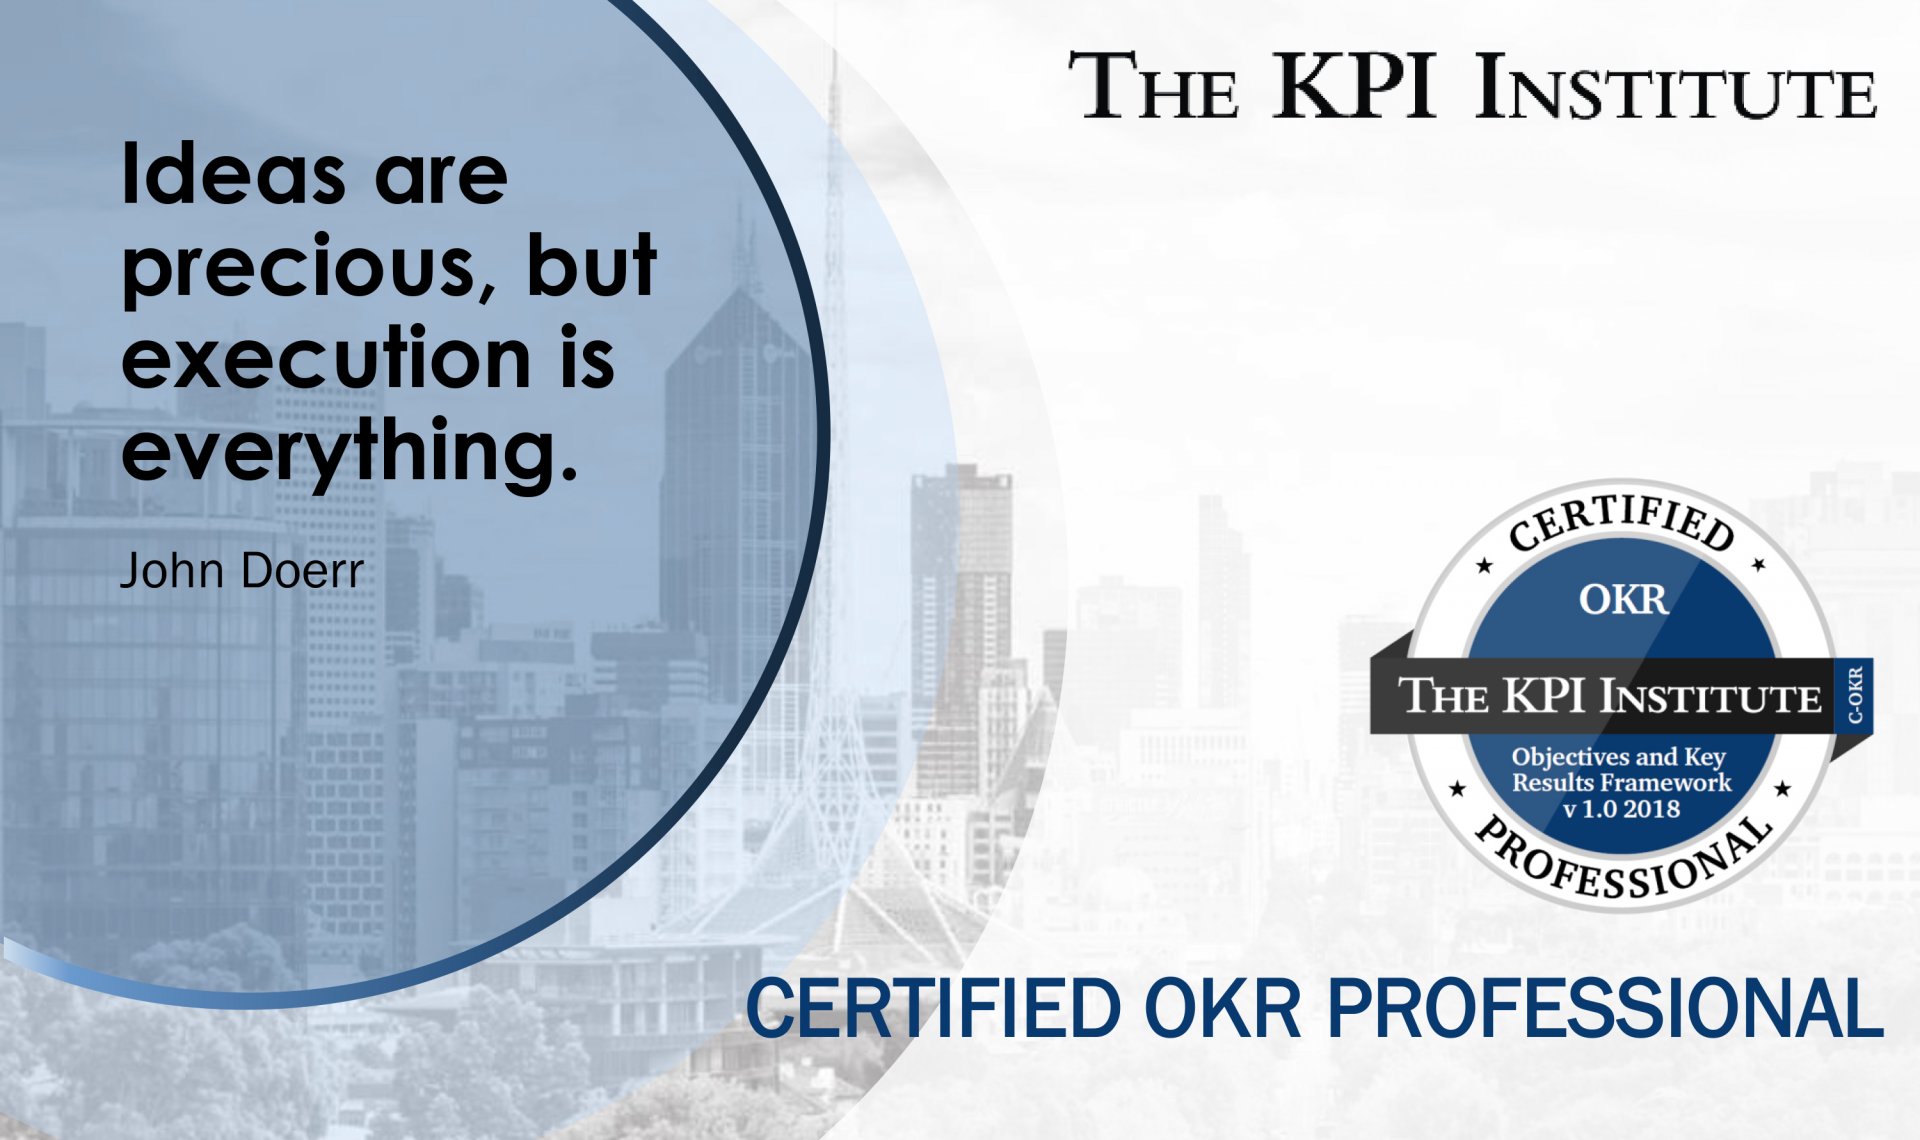 Certified OKR Professional онлайн сургалт анх удаа зохион байгуулагдлаа